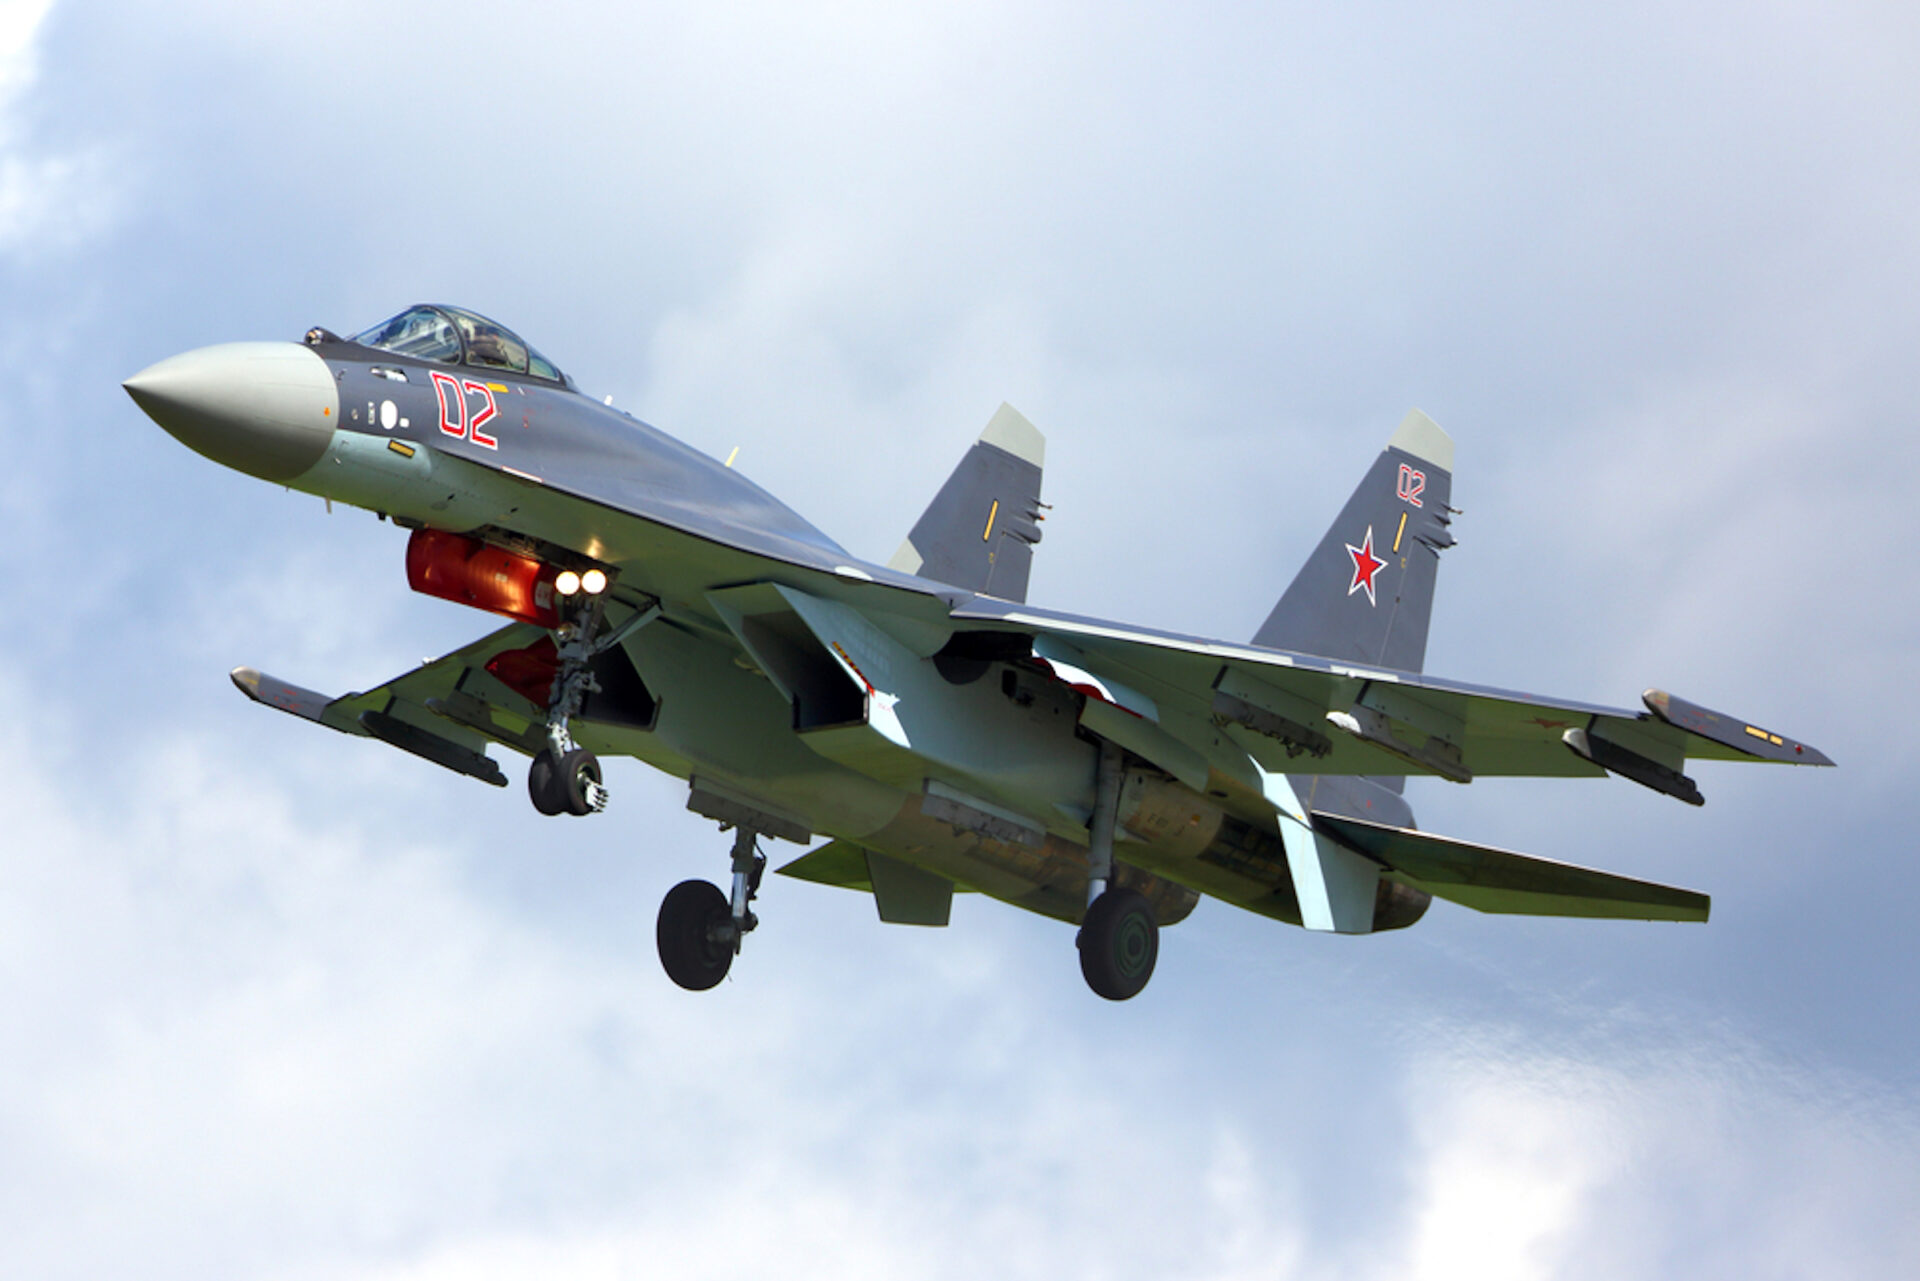 Is Tehran buying Russiaâs Su-35 jet?